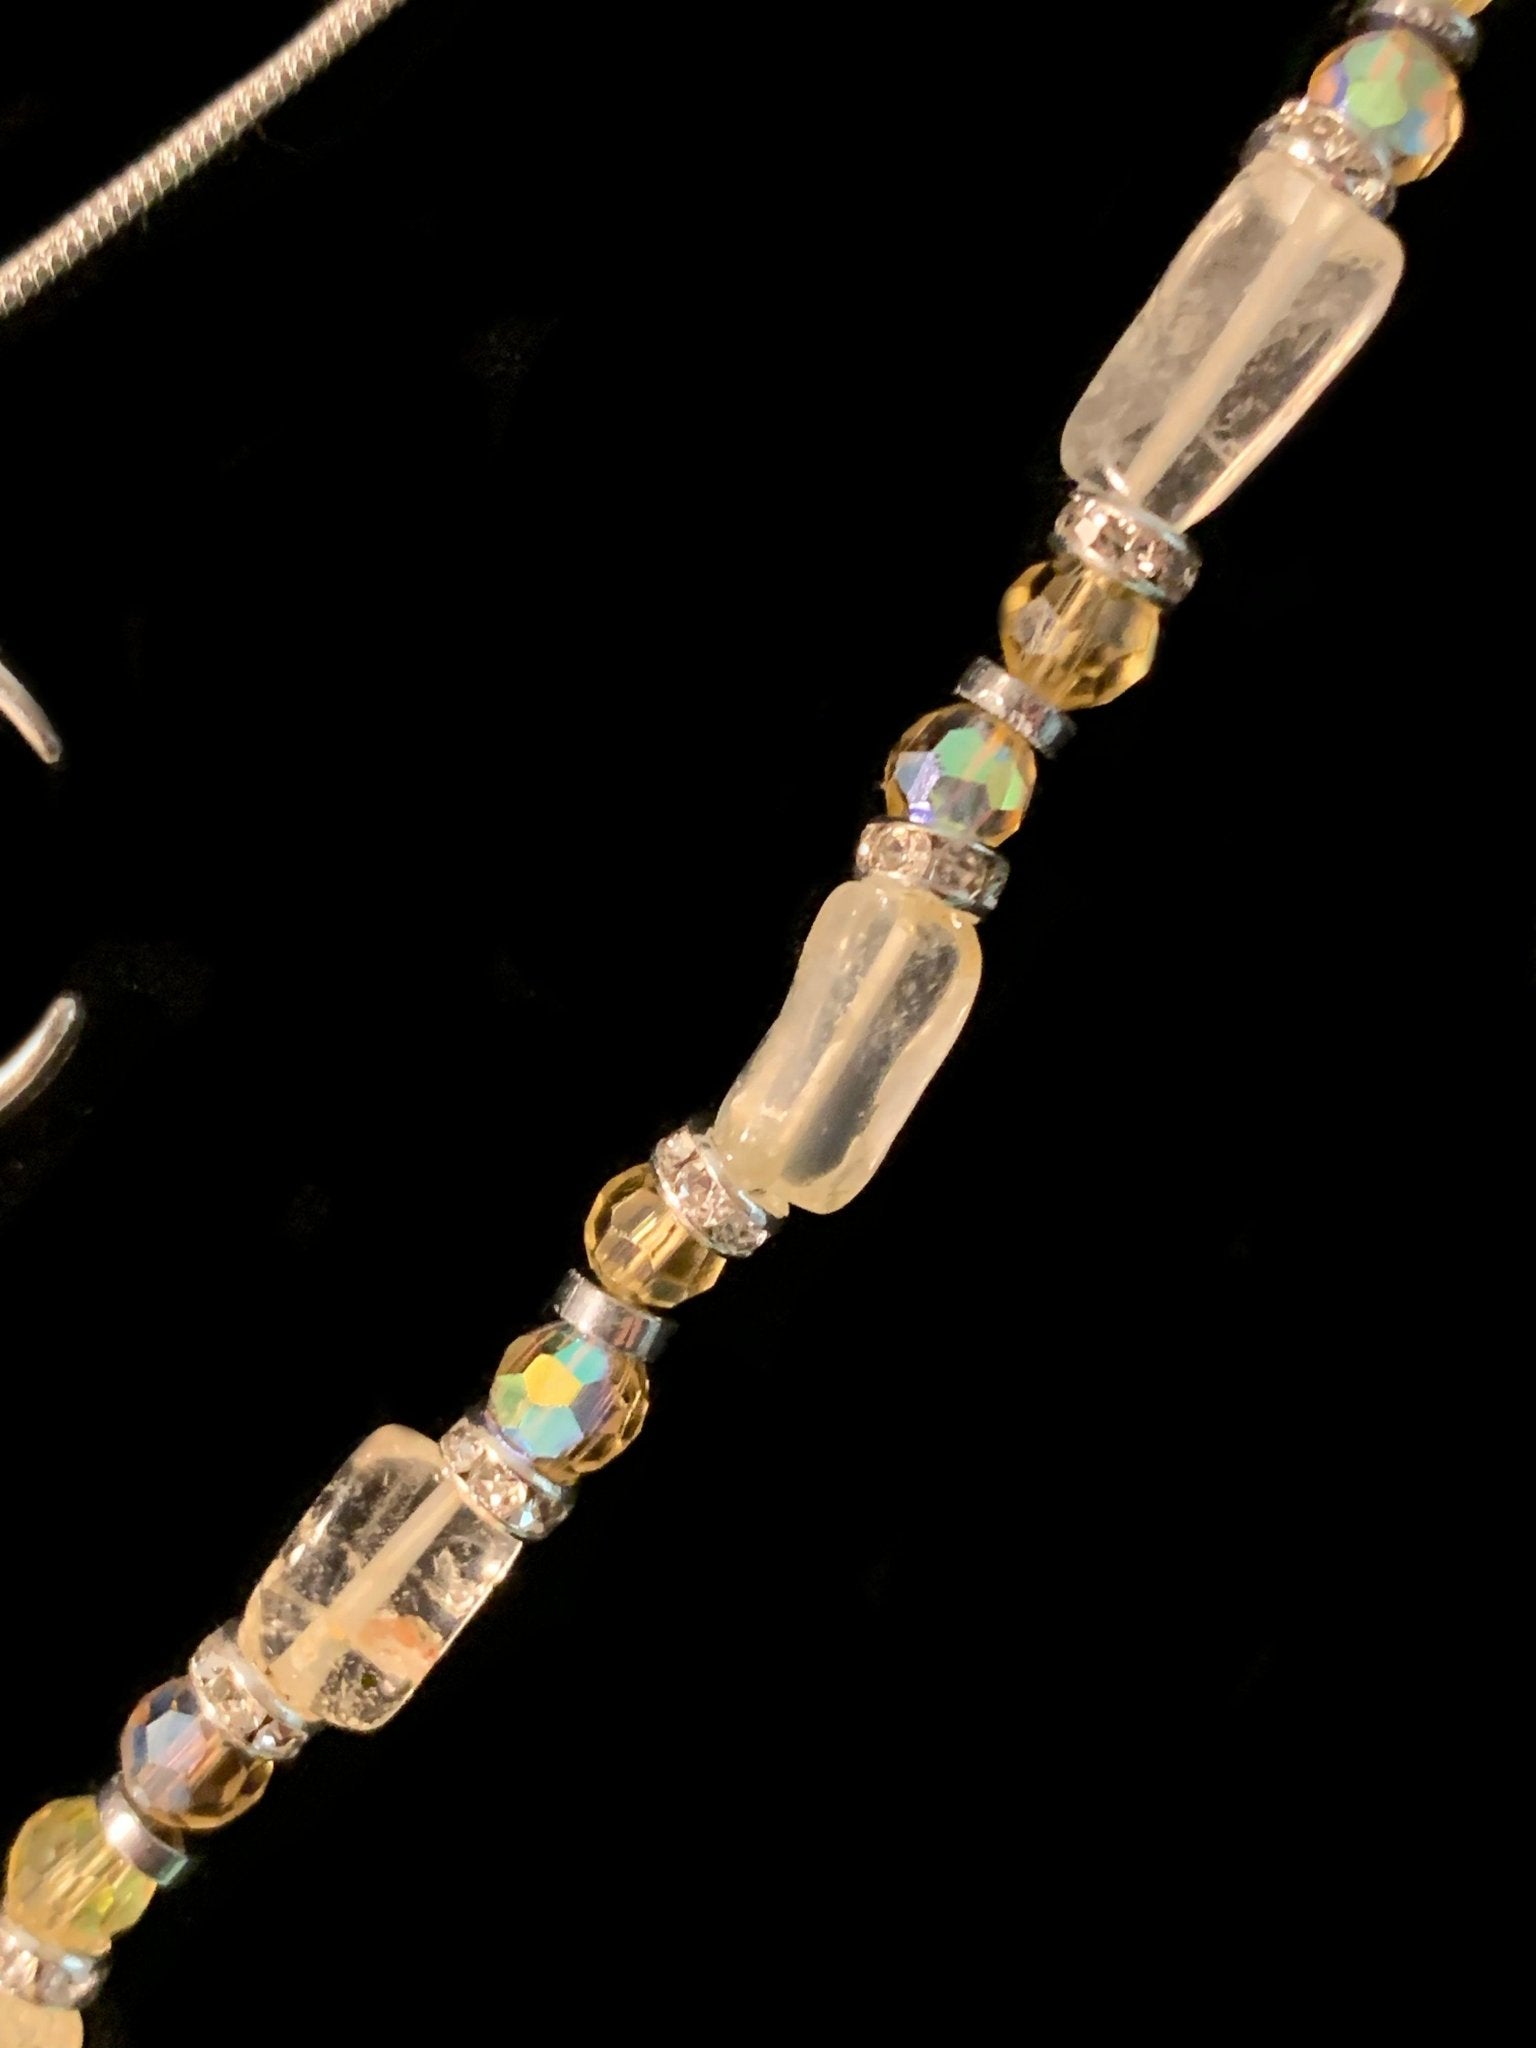 🔴SOLD🔴Sun, Moon, and Star Handmade Gemstone Layered Necklace Set (Silver, Aquamarine, Citrine) - Born Mystics